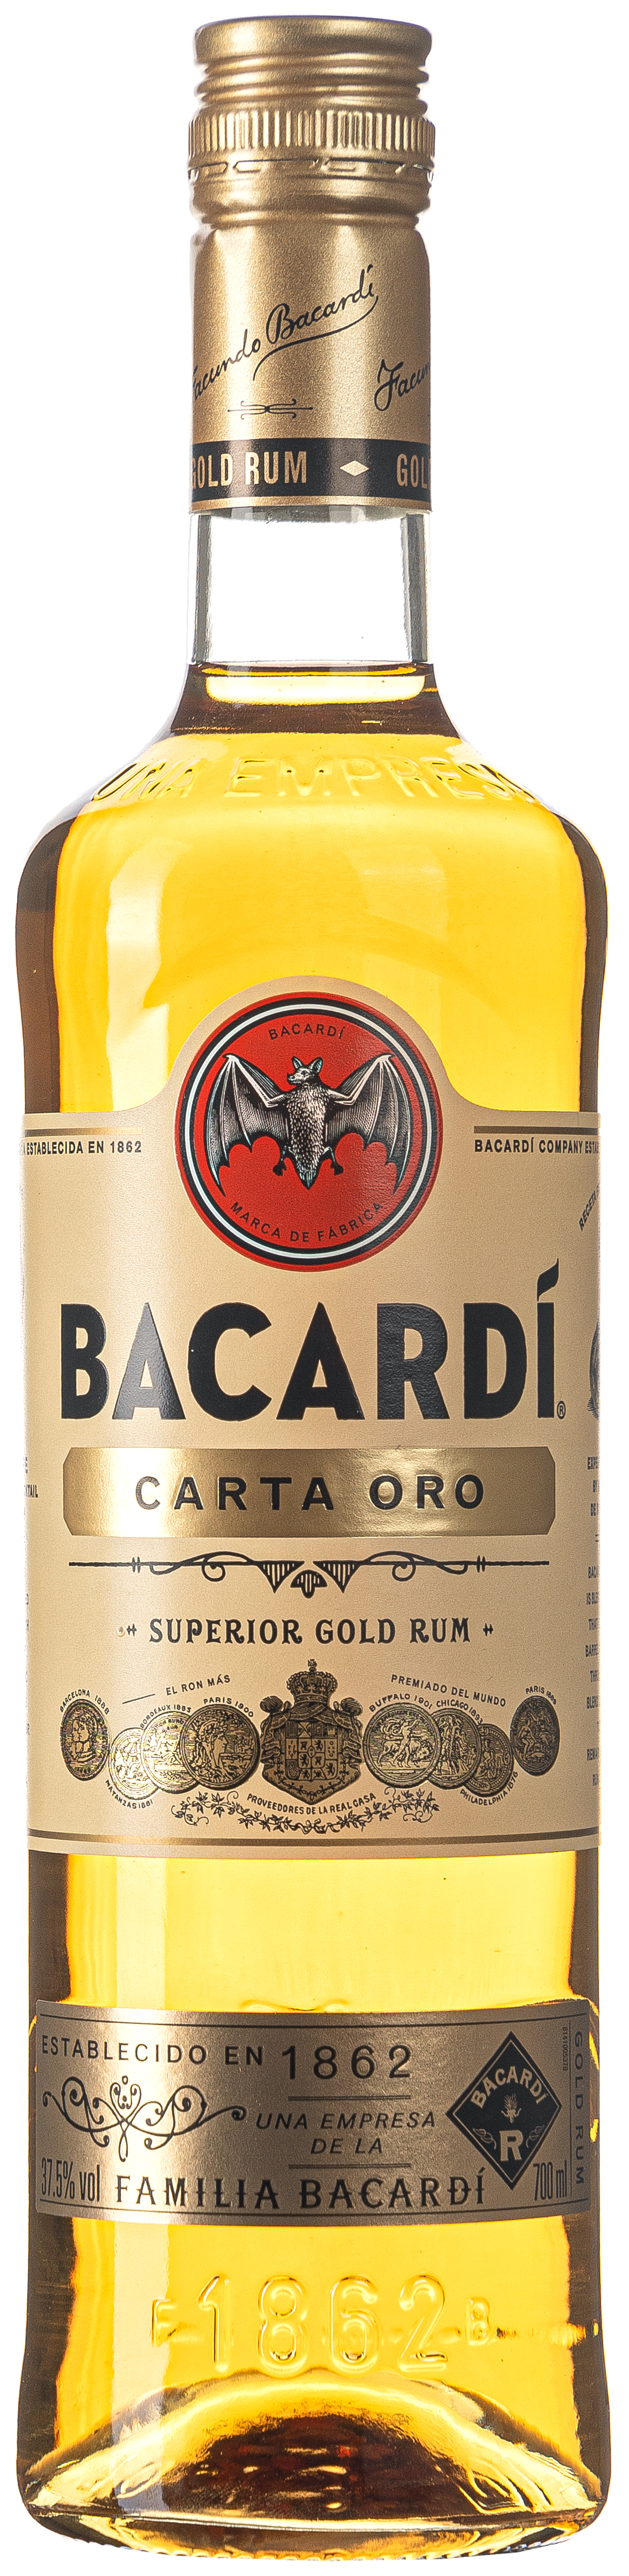 Bacardi Carta Oro Rum 37,5% vol. 0,7L